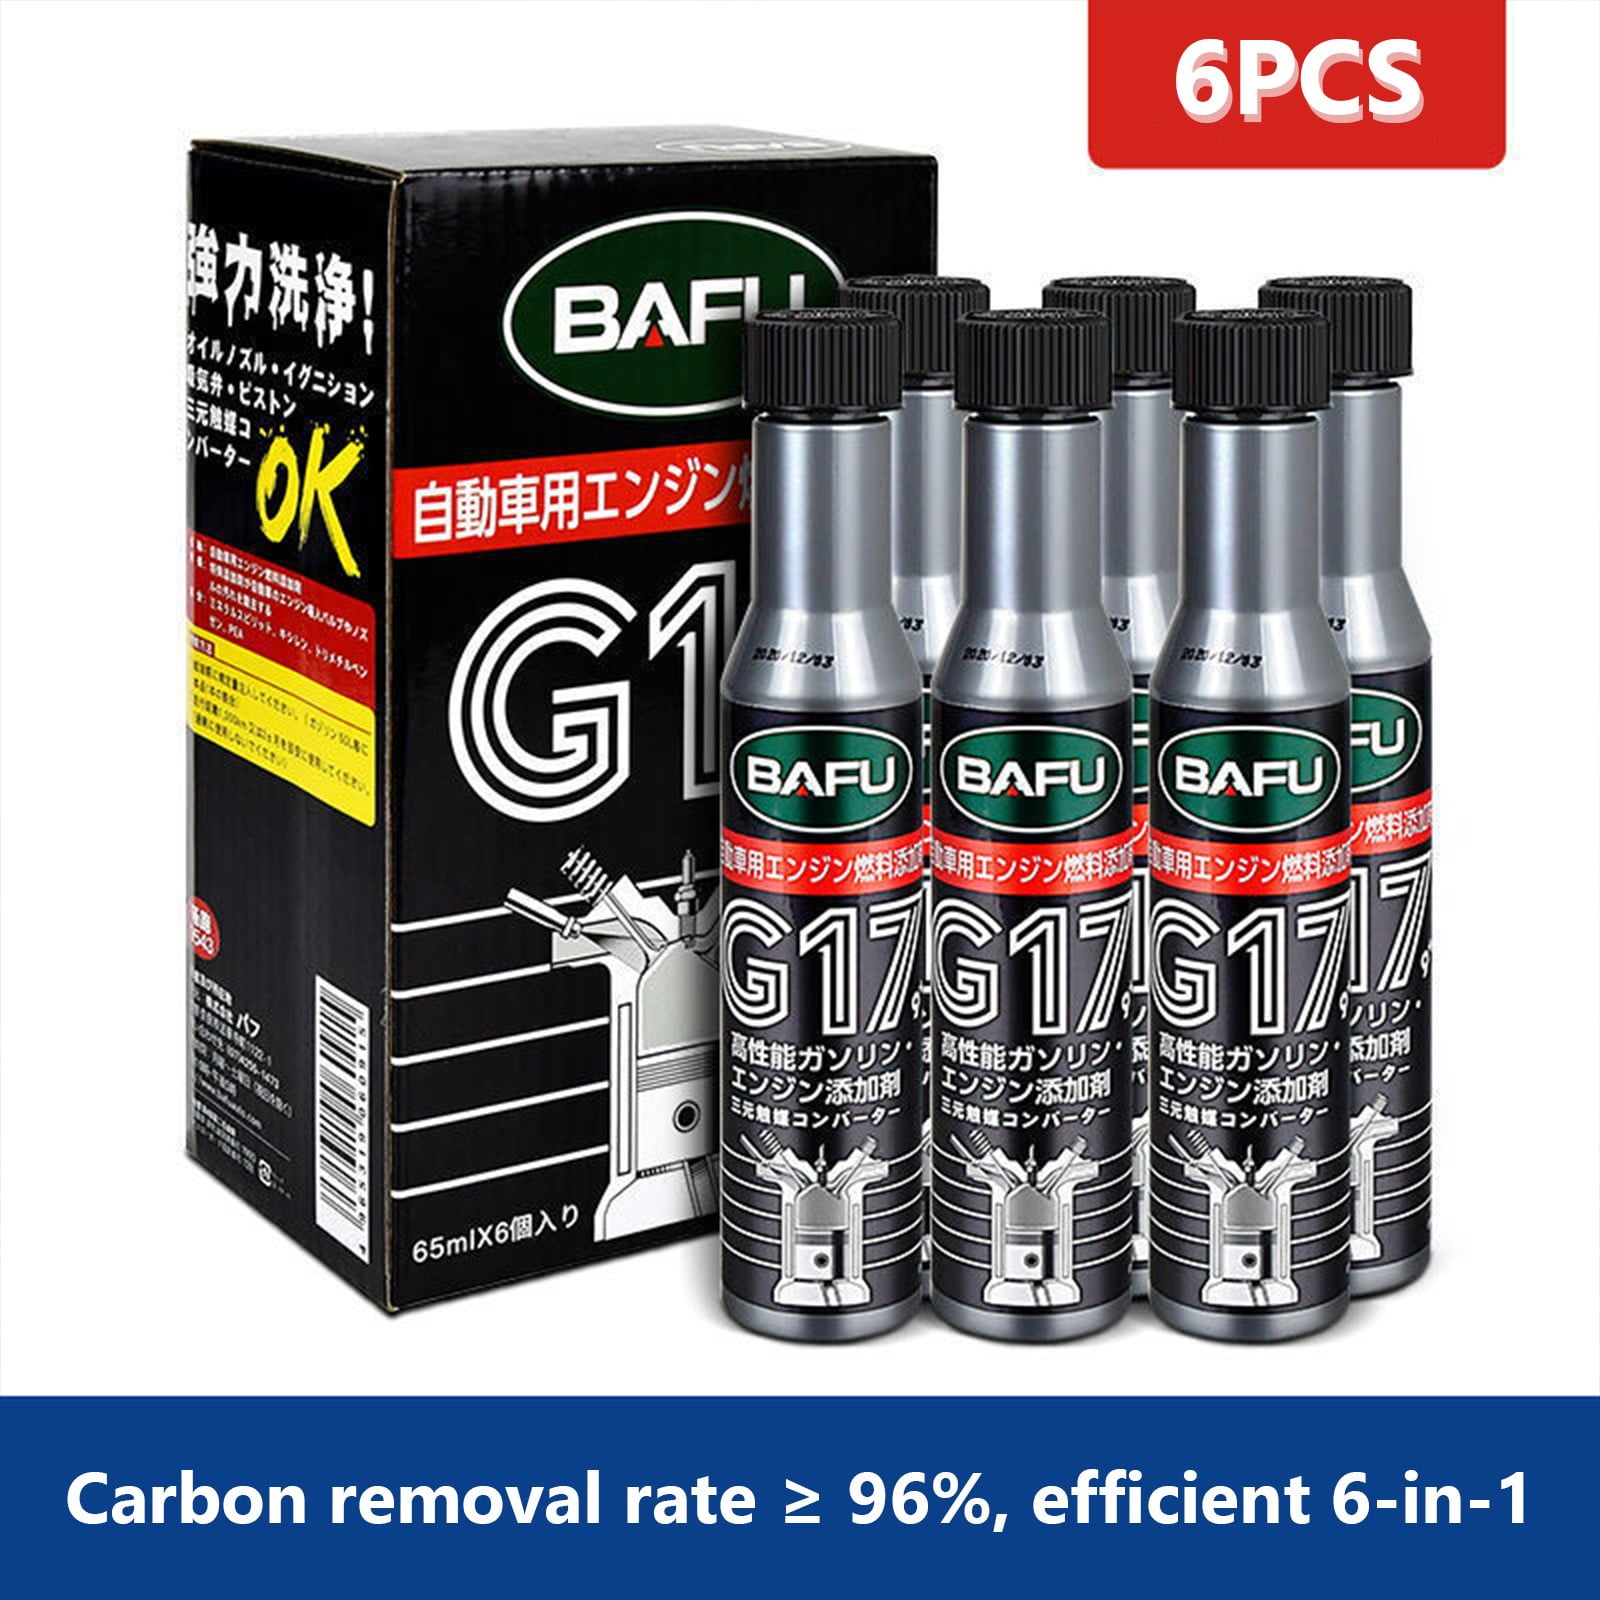 TRUNEB 3Pcs G17 Fuel Cleaner - Bafu G17 for Cars,Bafu Fuel Cleaner